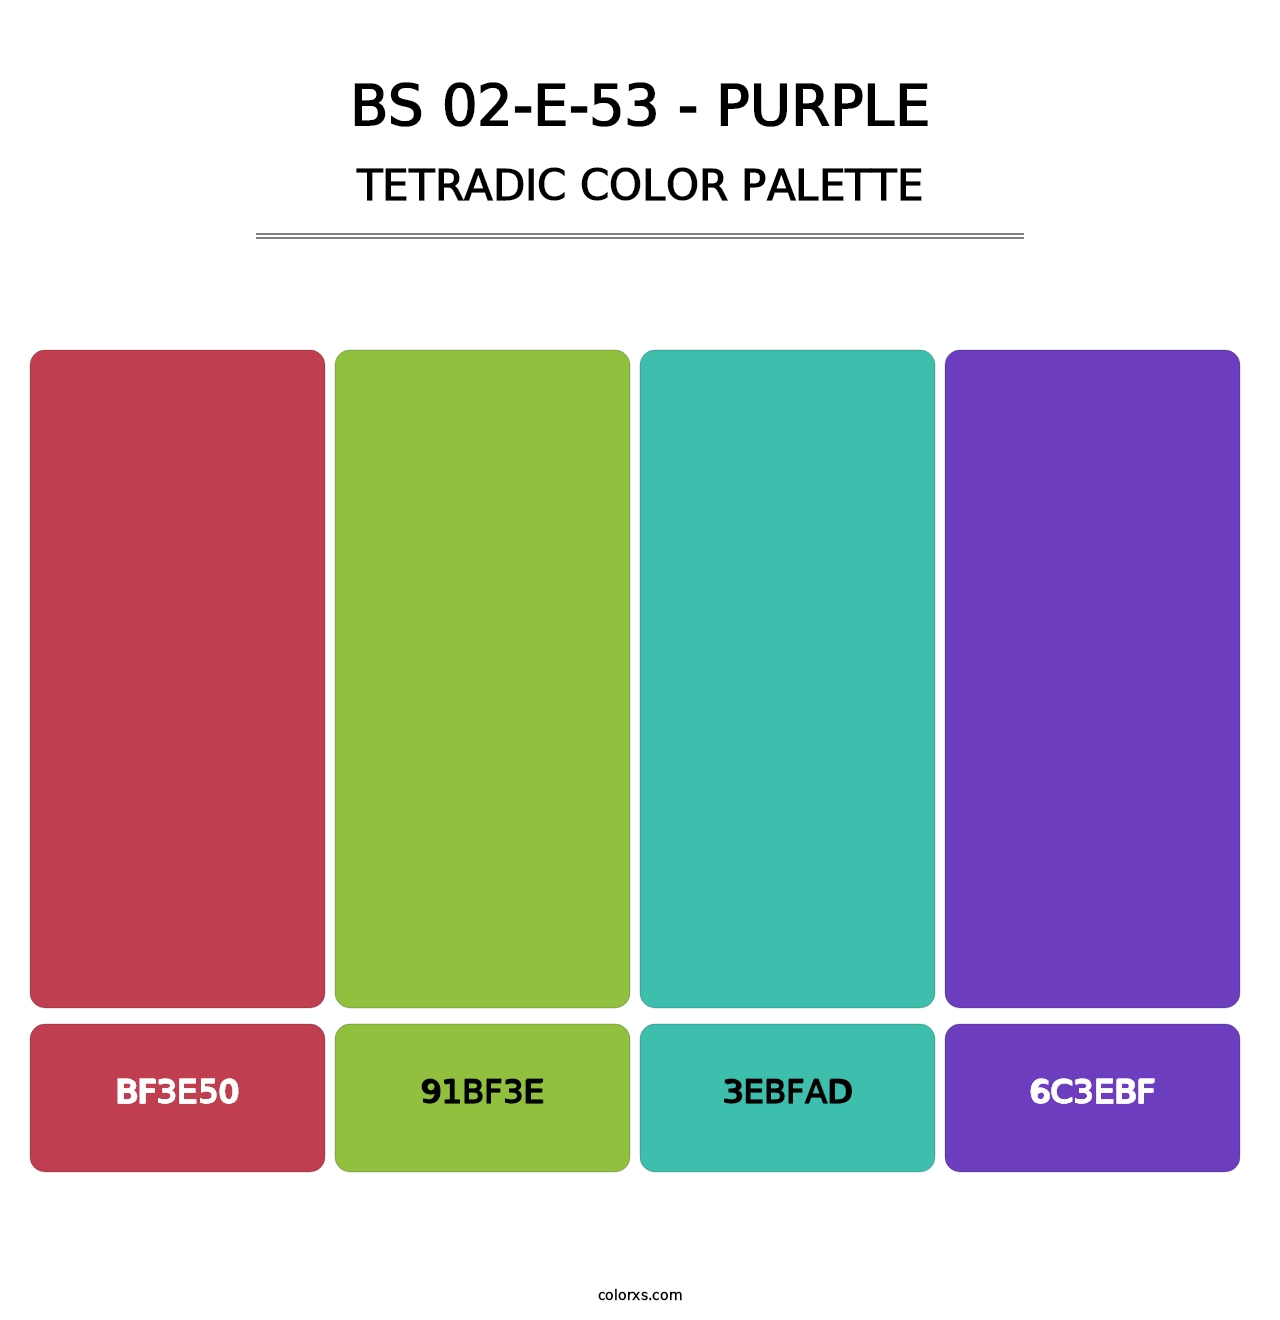 BS 02-E-53 - Purple - Tetradic Color Palette